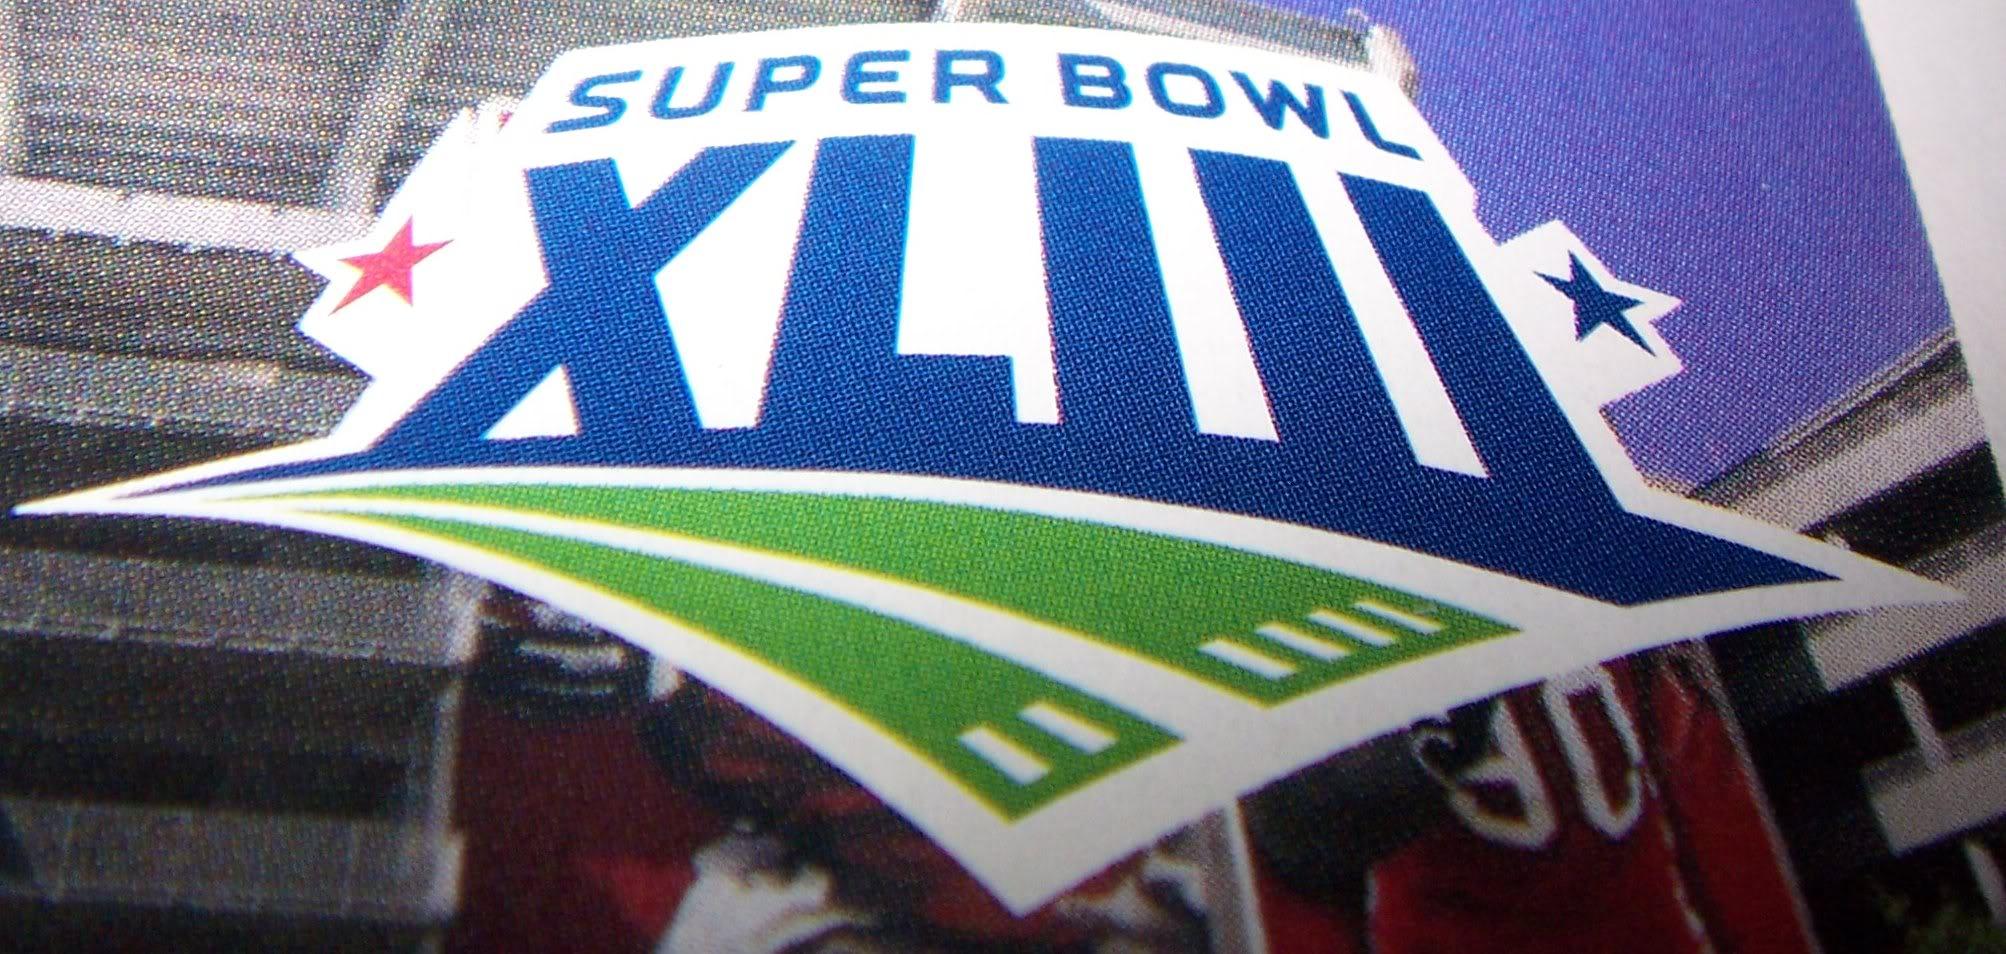 XLIII Logo - Super Bowl XLIII Logo Logos Creamer's Sports Logos